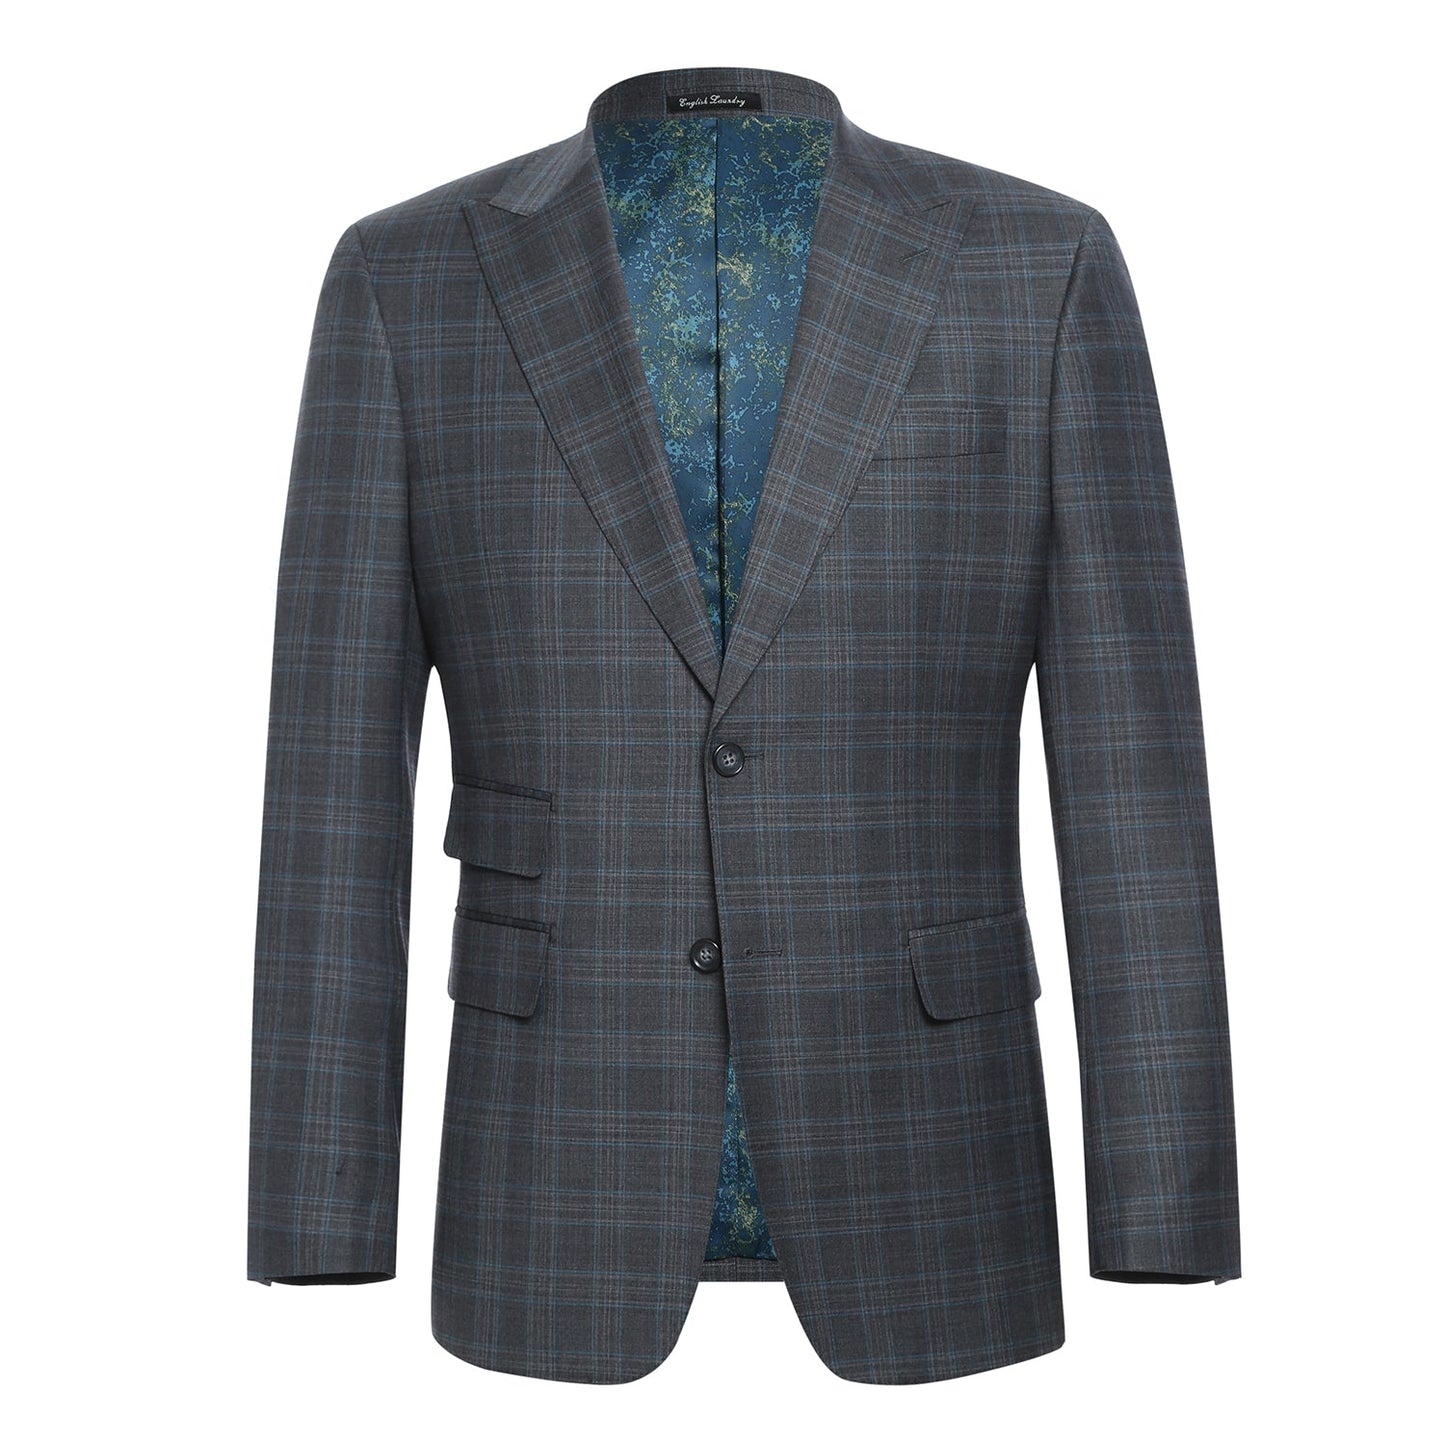 EL62-68-095 English Laundry Slim Fit Wool Blend Gray Plaid Peak Lapel Suit